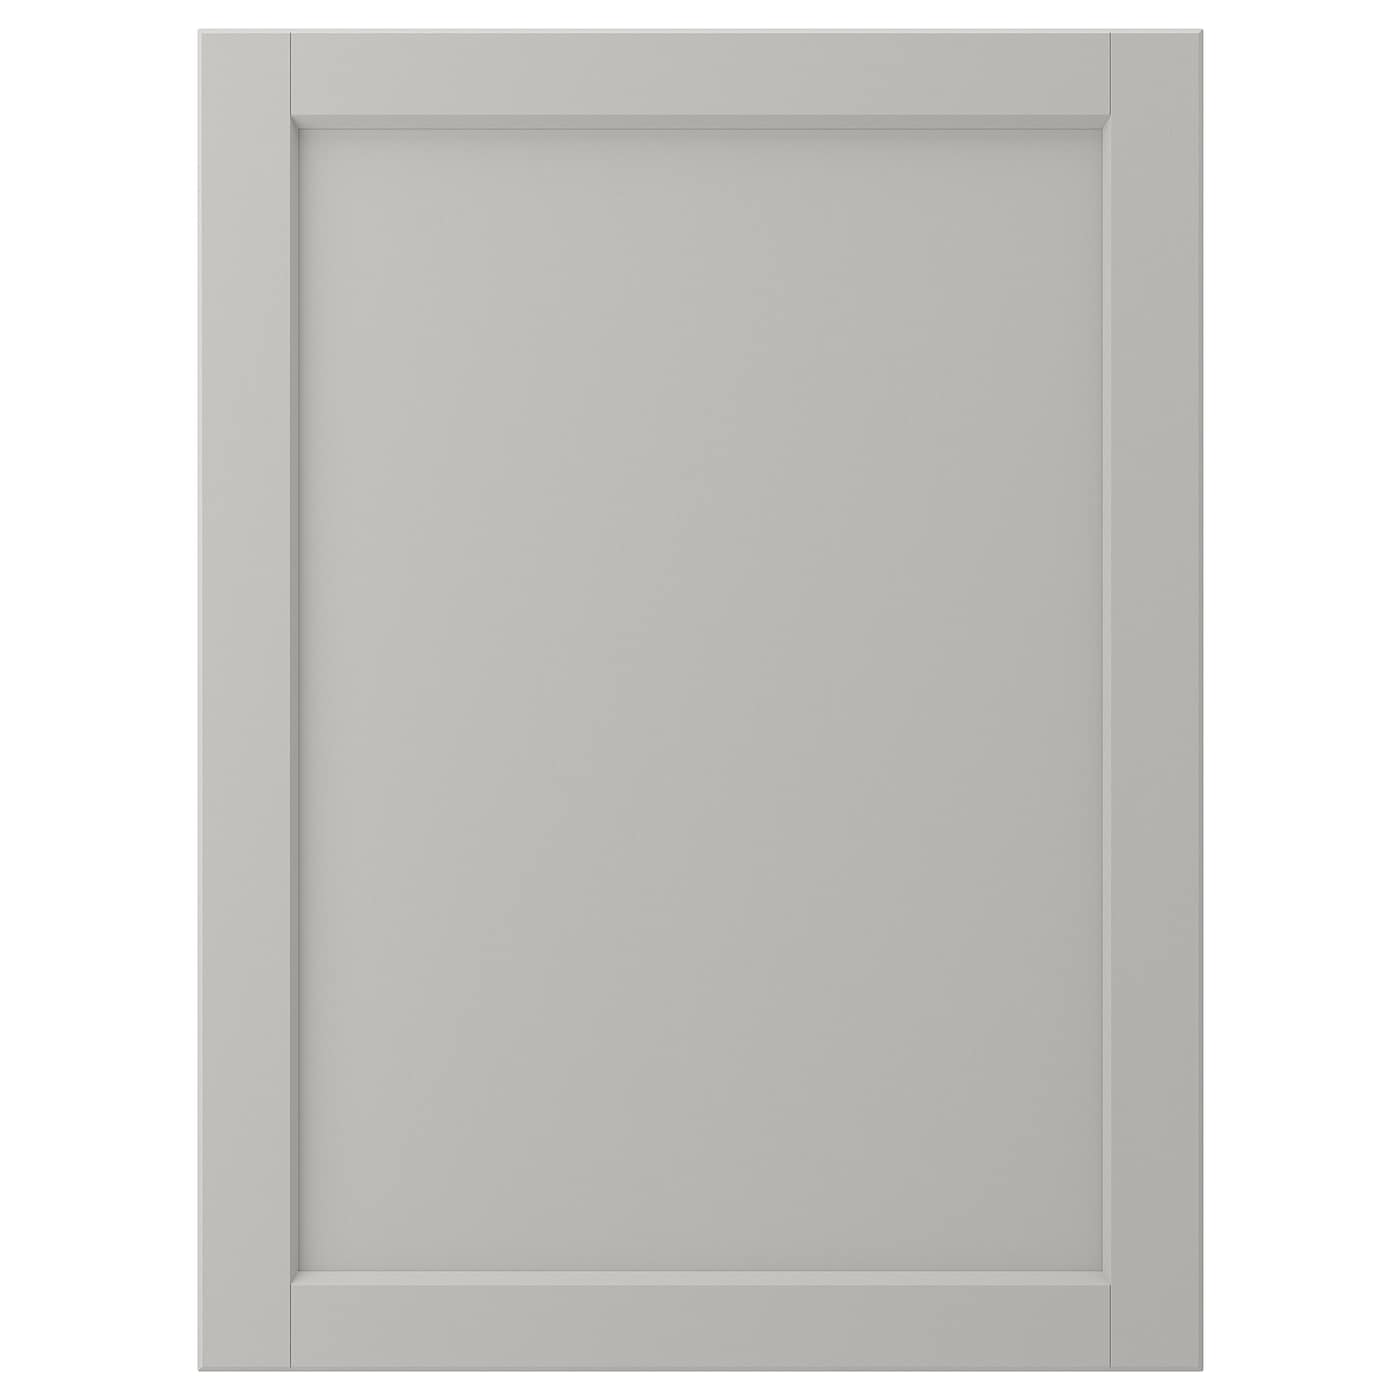 Дверца - IKEA LERHYTTAN, 80х60 см, светло-серый, ЛЕРХЮТТАН ИКЕА